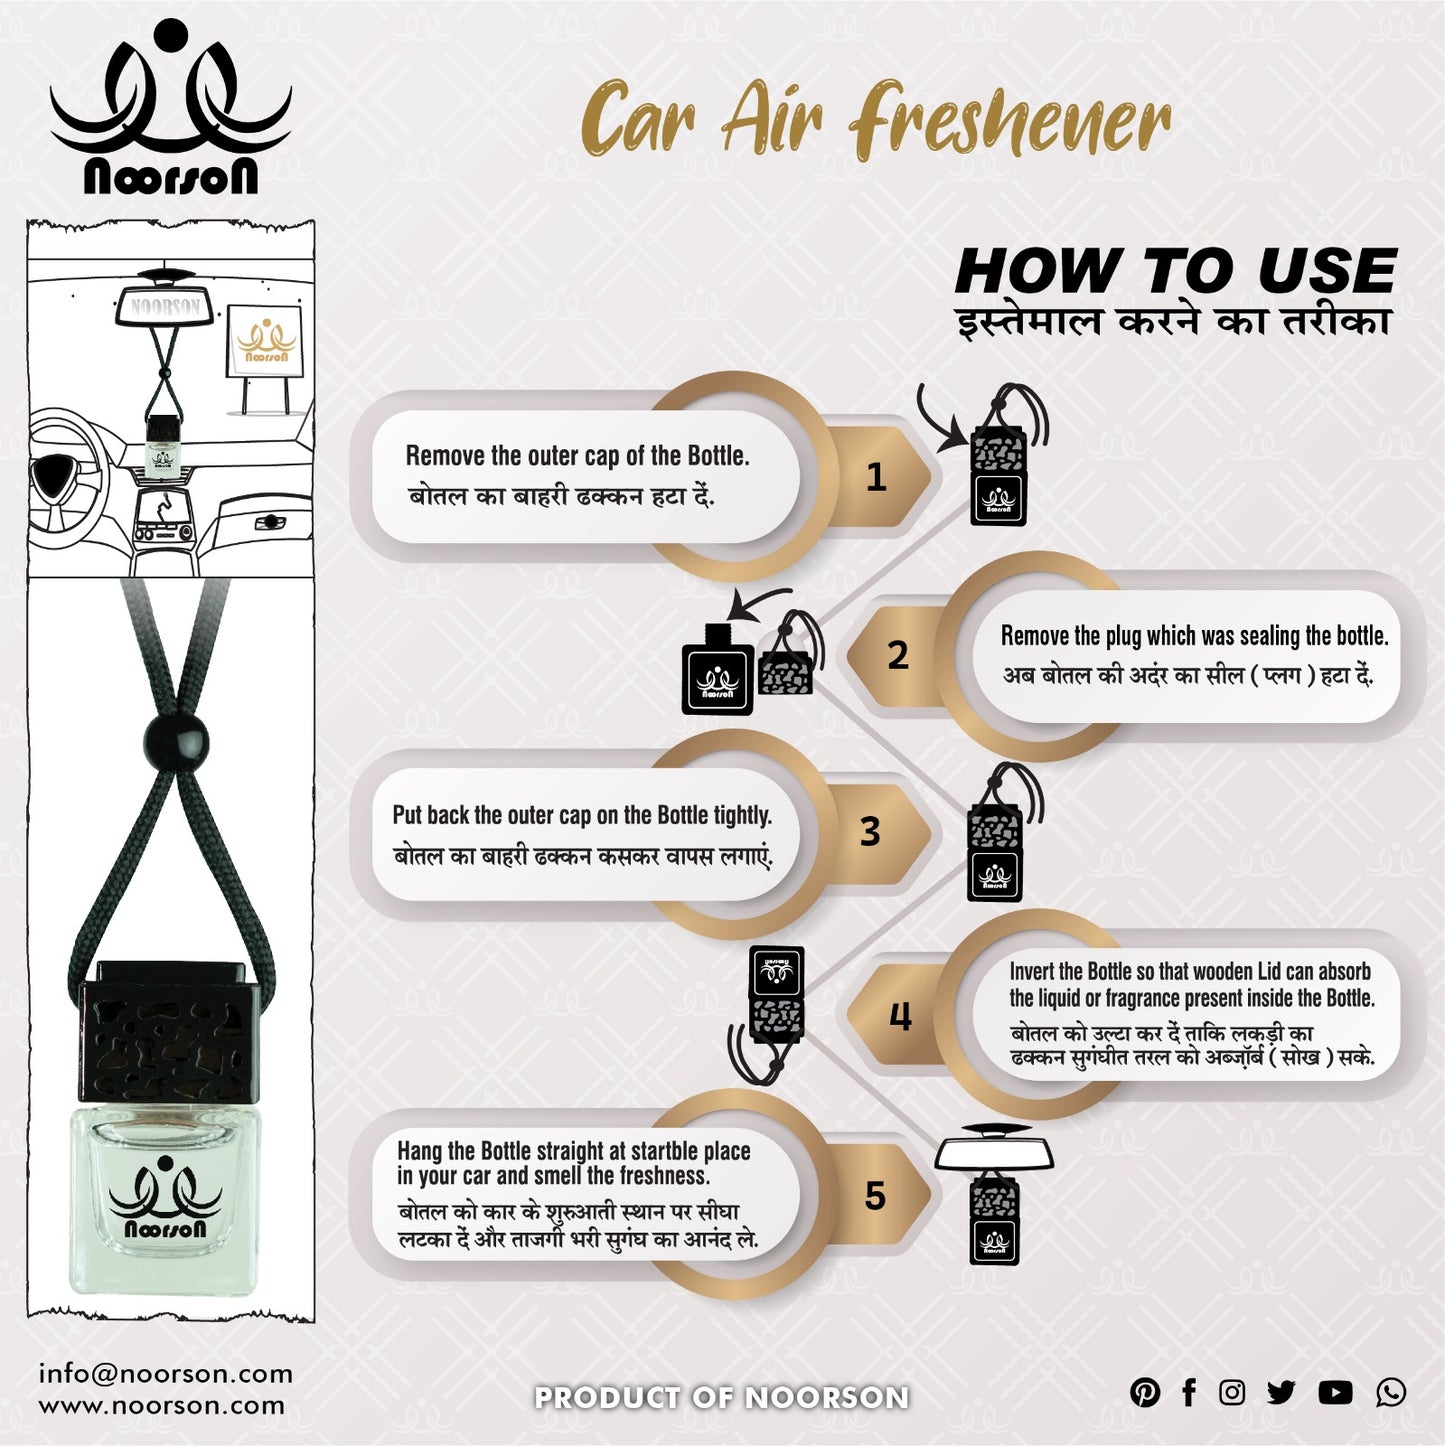 Noorson Lirils Car Air Freshener Hanging with 100% Natural Essential Oils